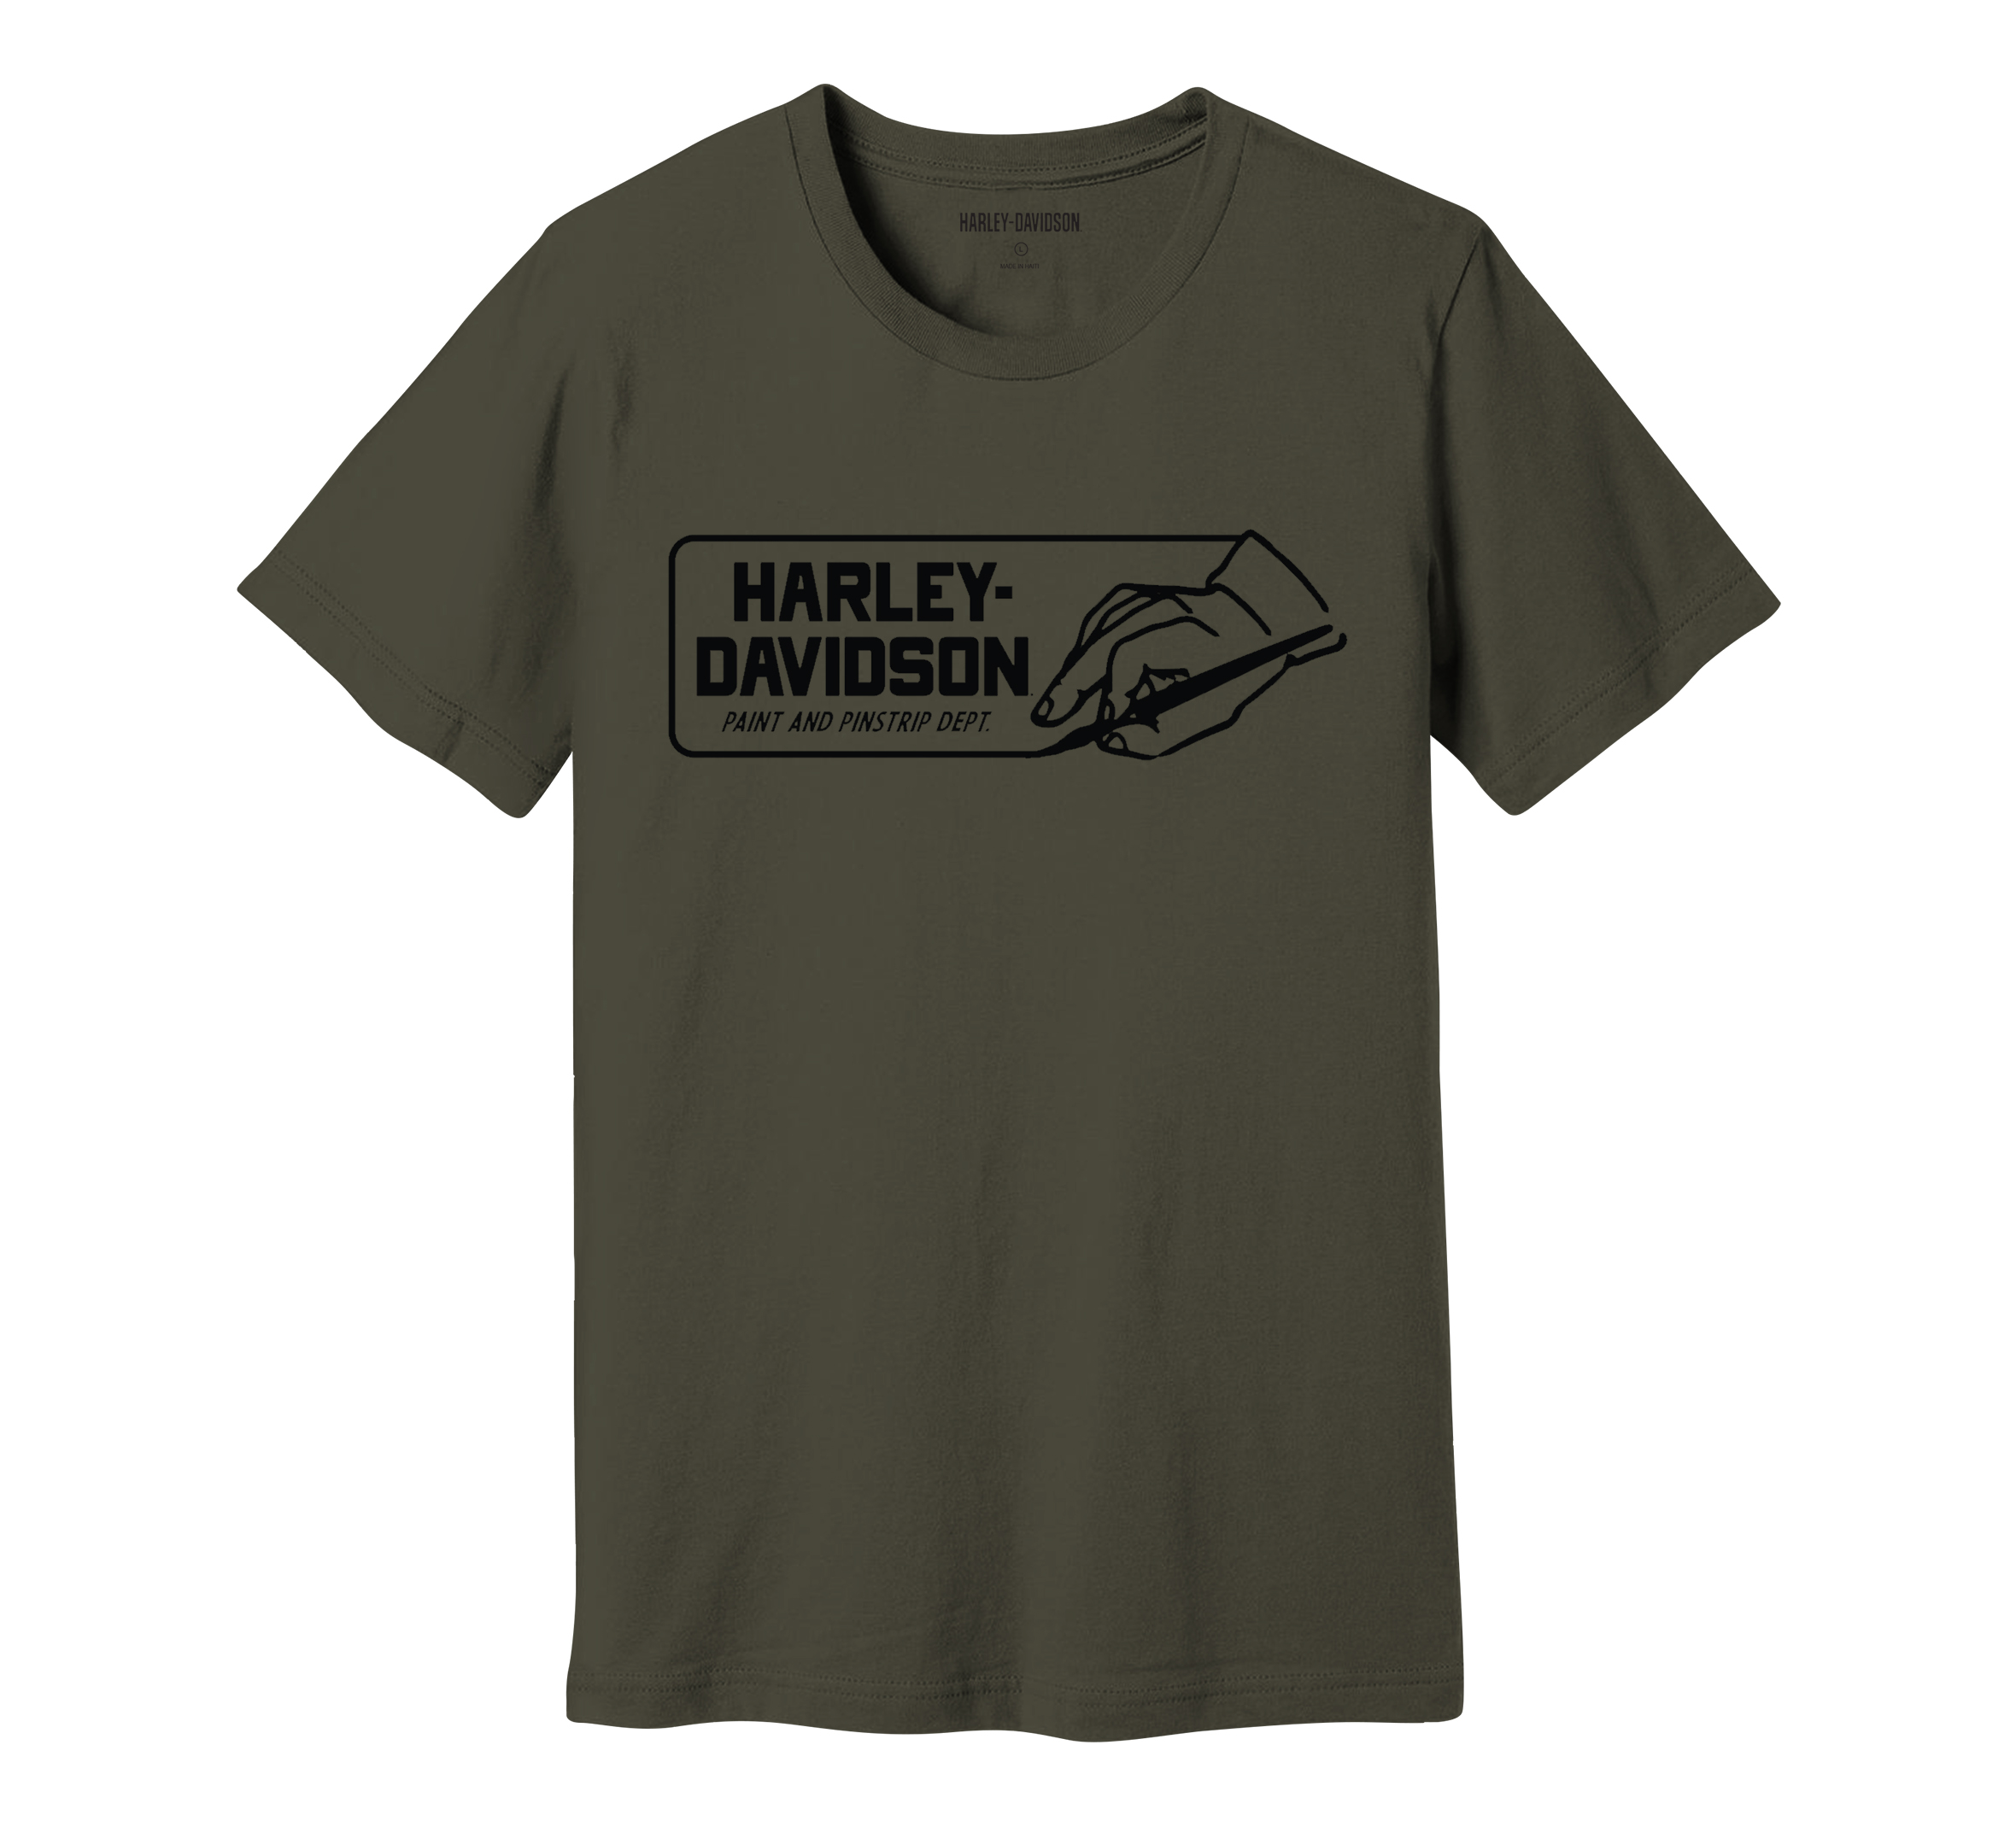 Harley Davidson Road Glide Inspired Motorcycle Art Men’s T-Shirt 